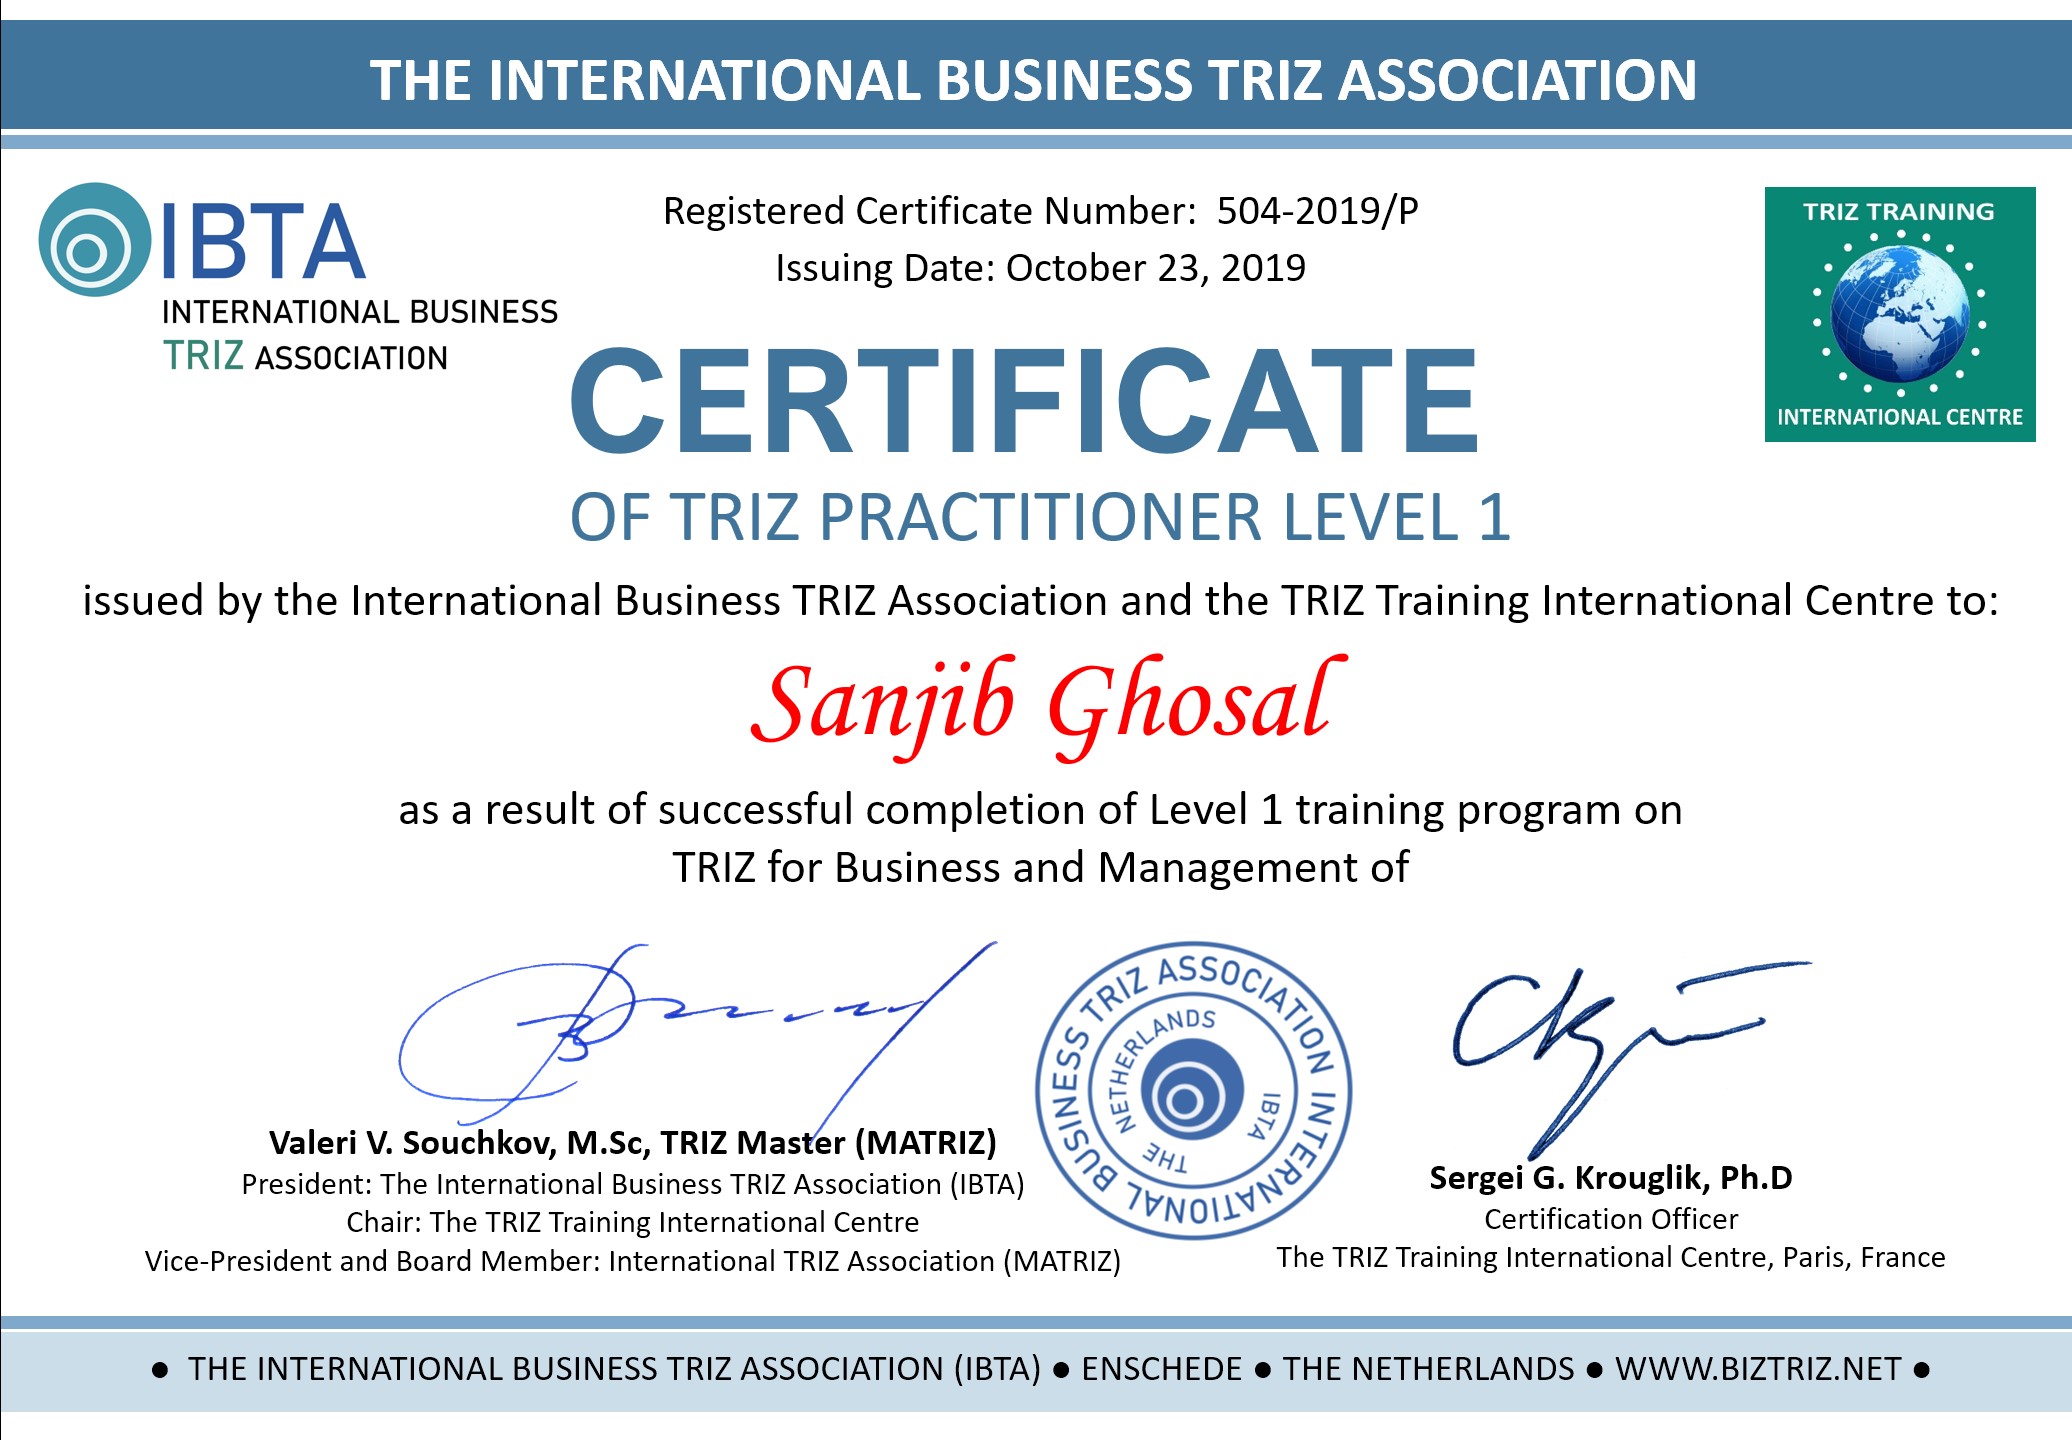 PowerPoint Slide Show IBTA Certificate 504 Sanjib Ghosal.pptx 11 06 2023 12 18 19